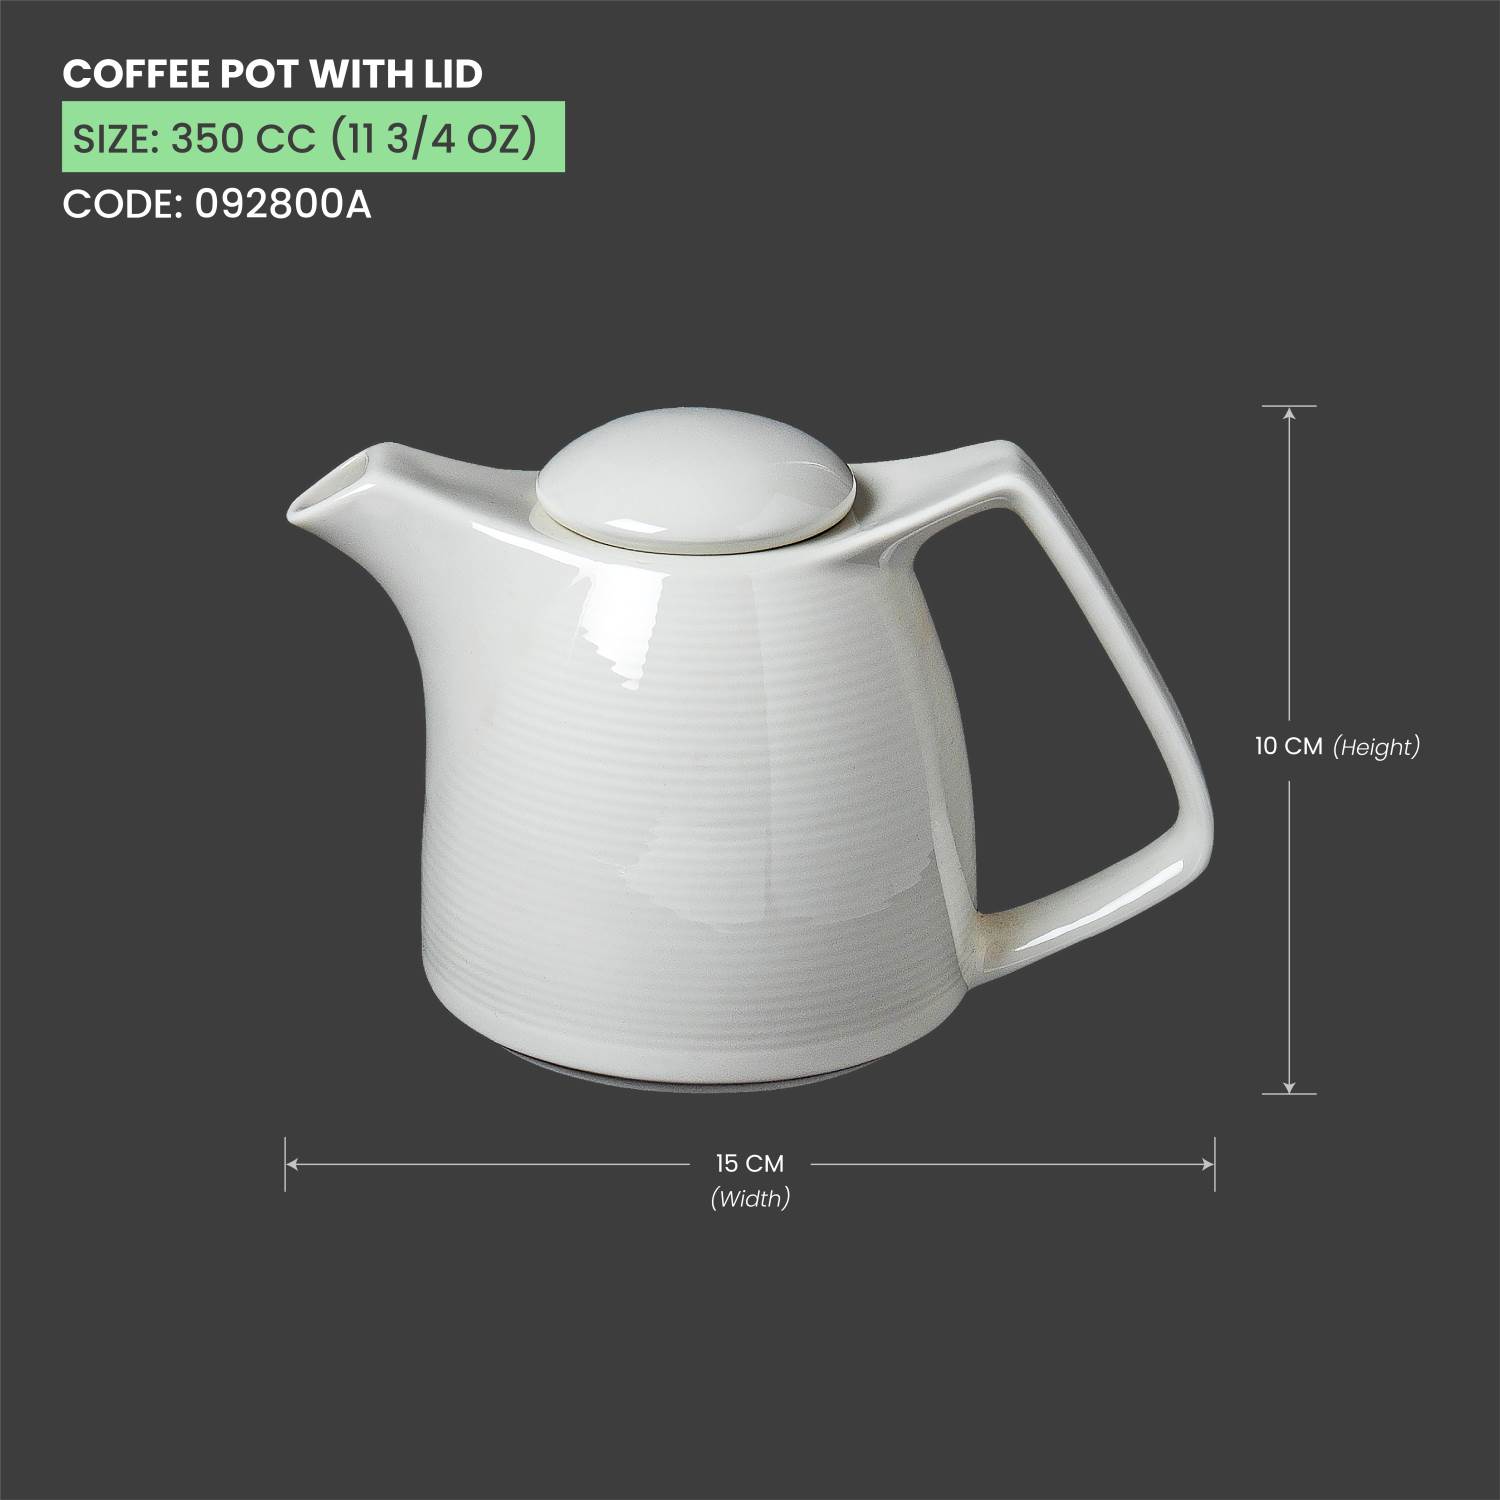 Baralee Wish Coffee Pot With Lid 350 Cc (11 3/4 Oz)